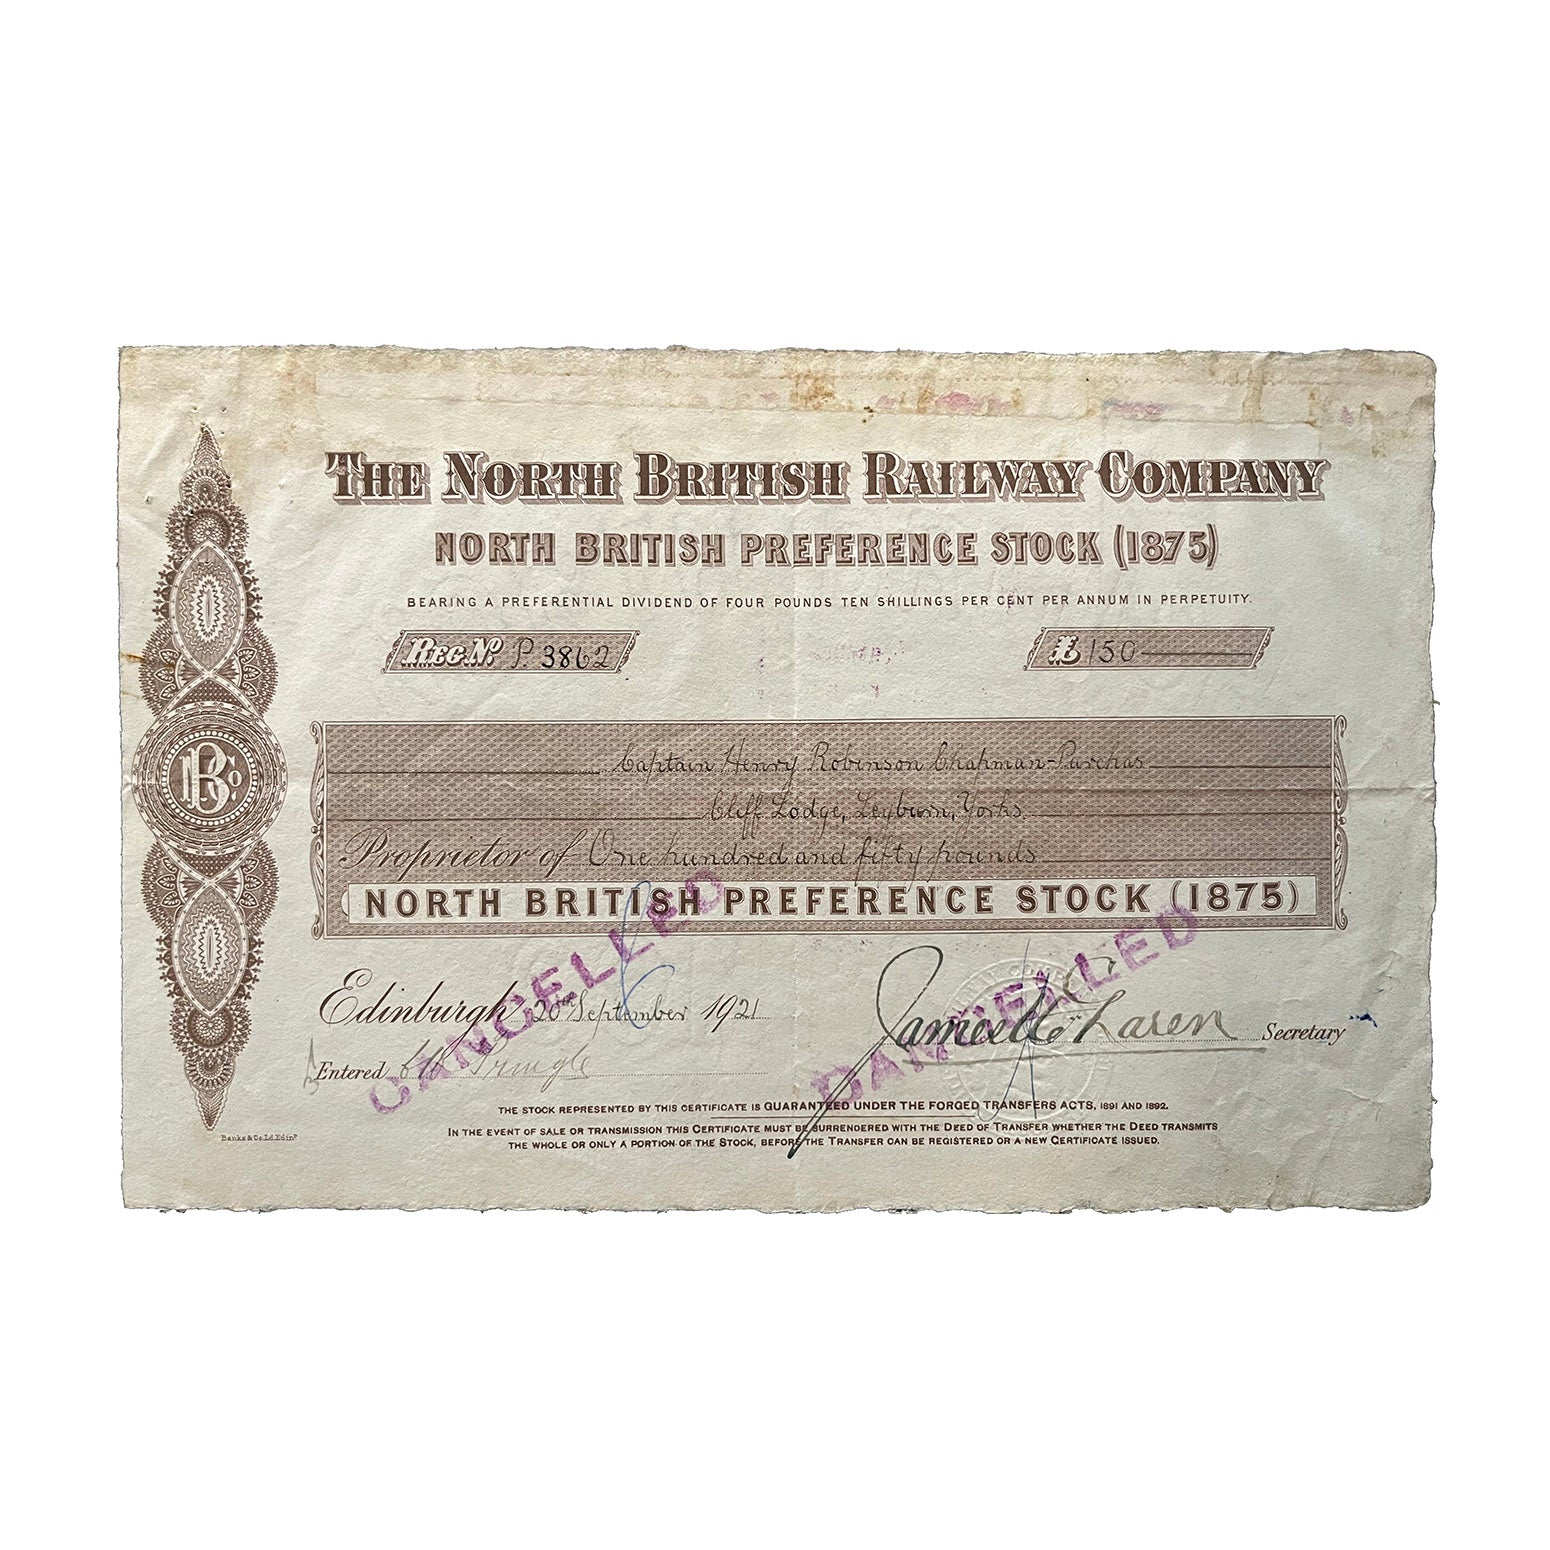 Original railway share certificate, North British Railway Company, Preference Stock, £150, issued 1921. 